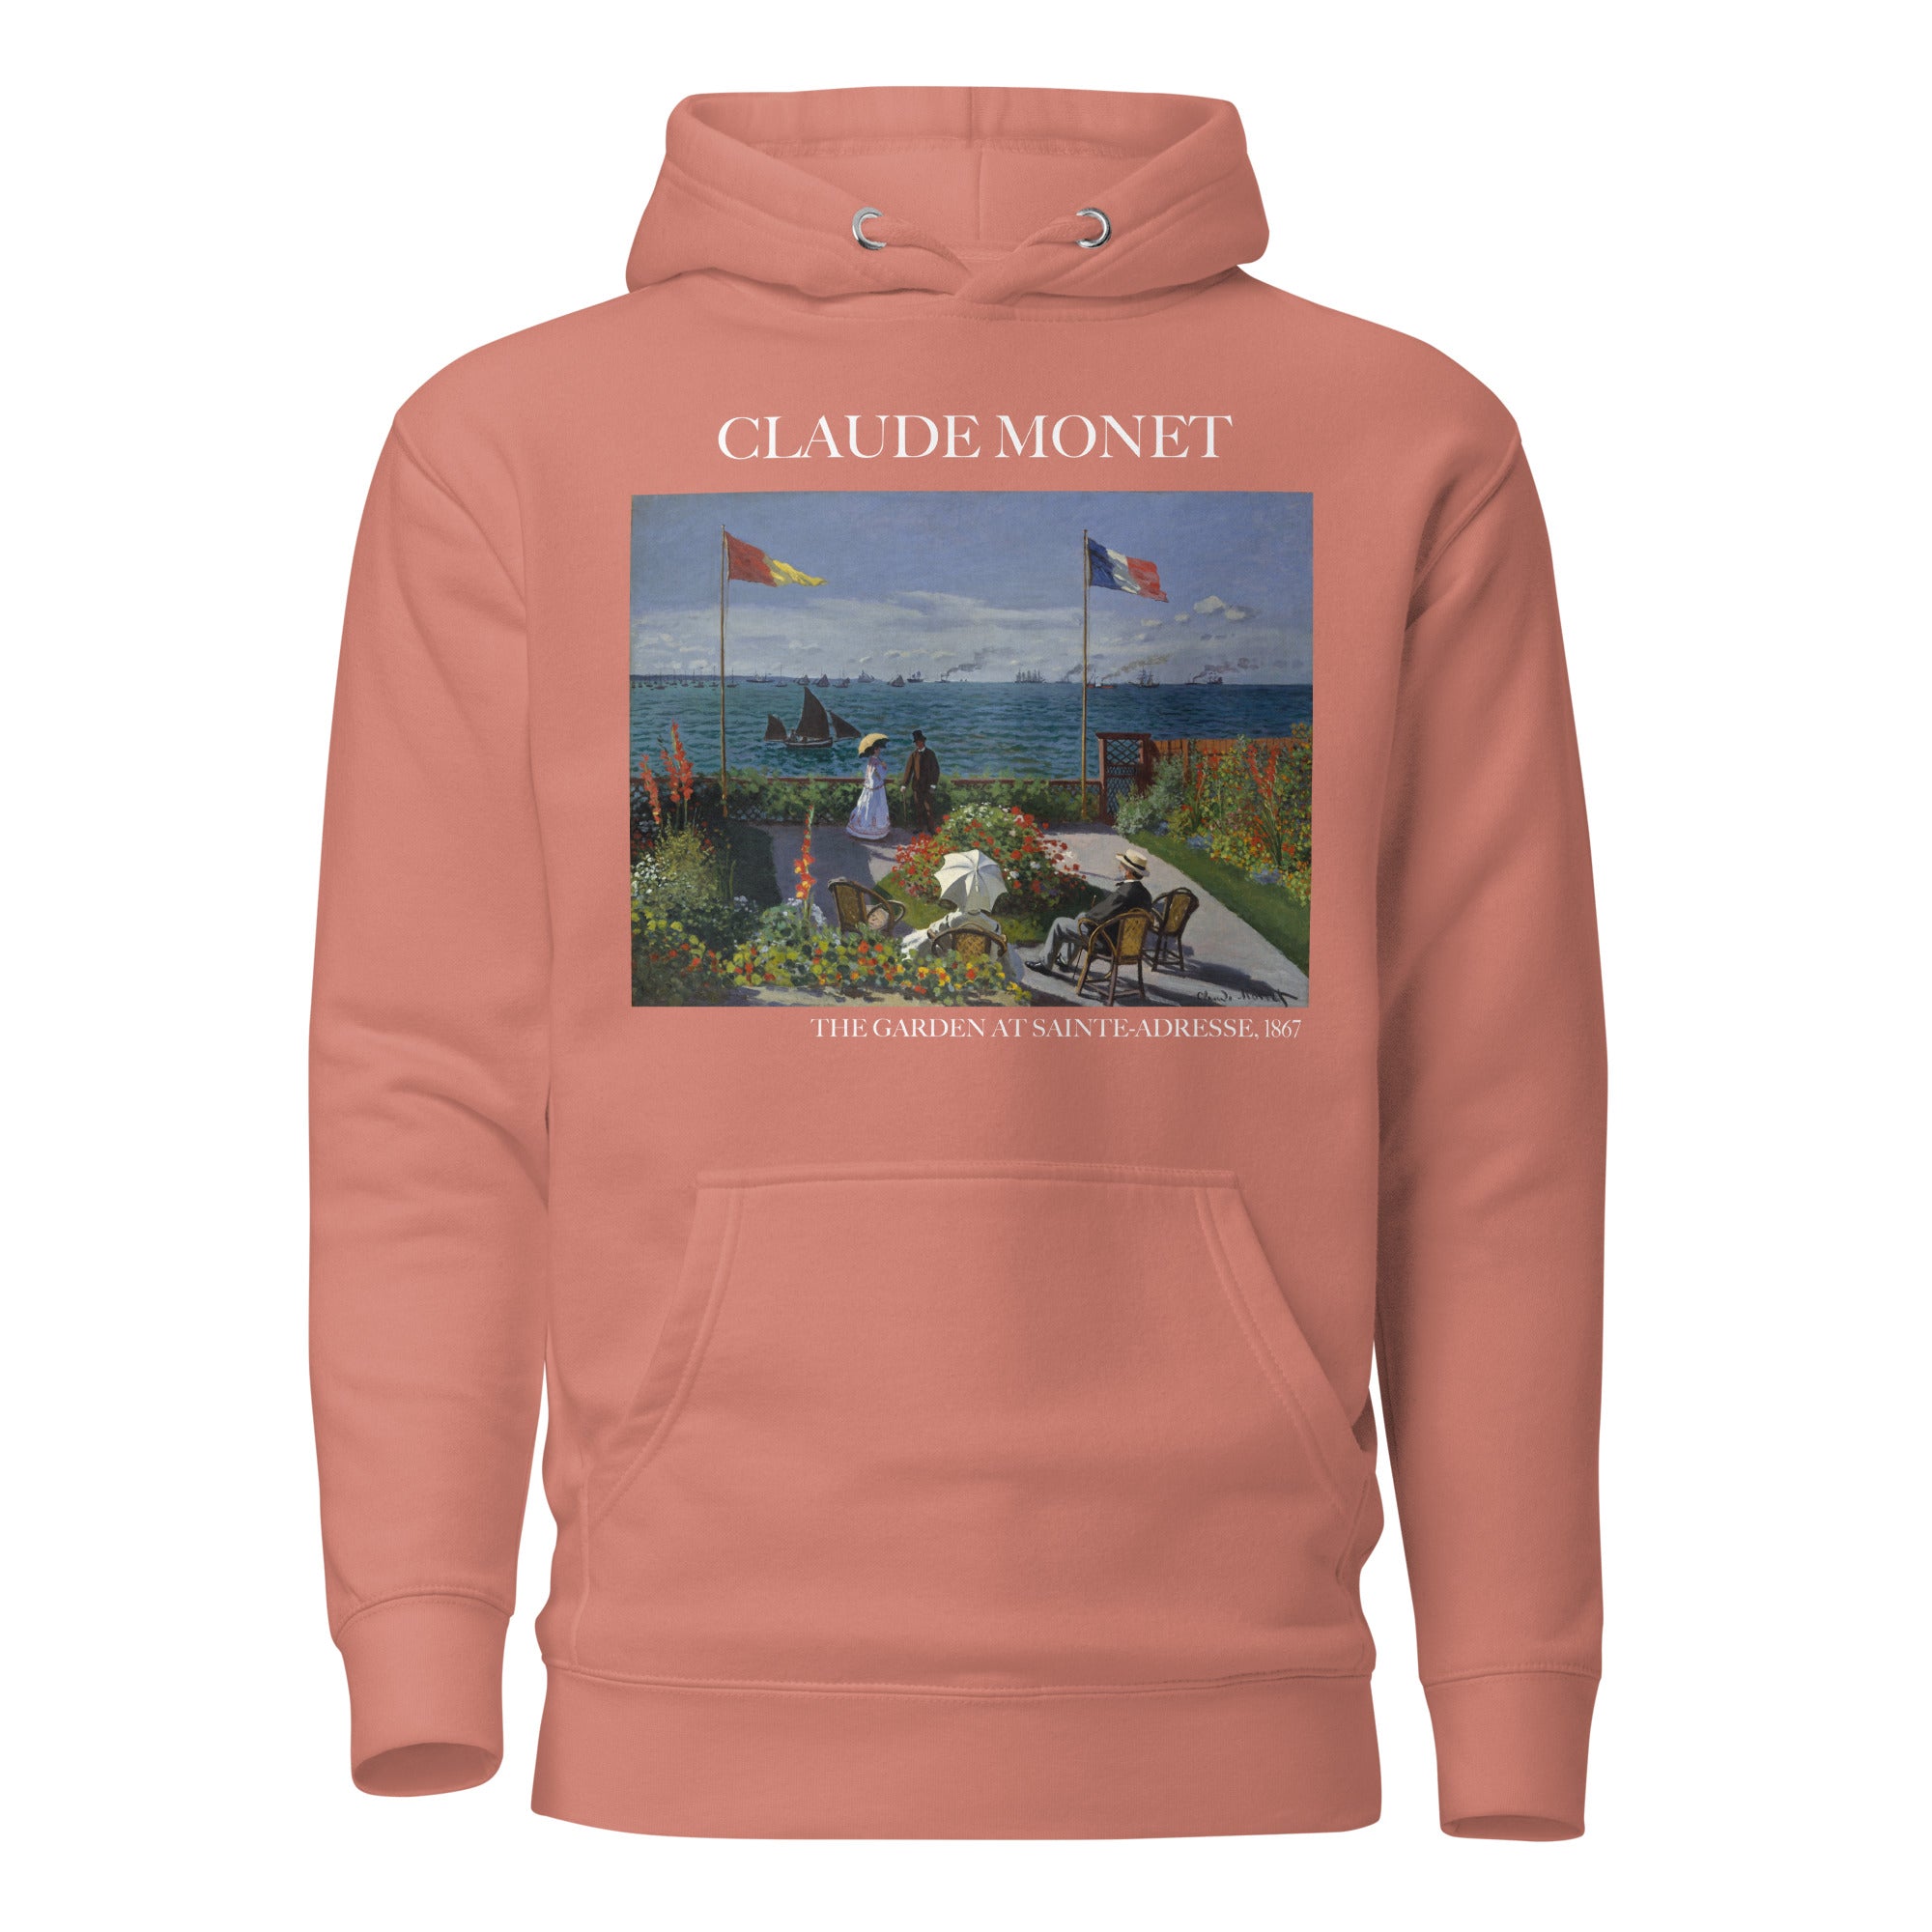 Claude Monet 'The Garden at Sainte-Adresse' Famous Painting Hoodie | Unisex Premium Art Hoodie